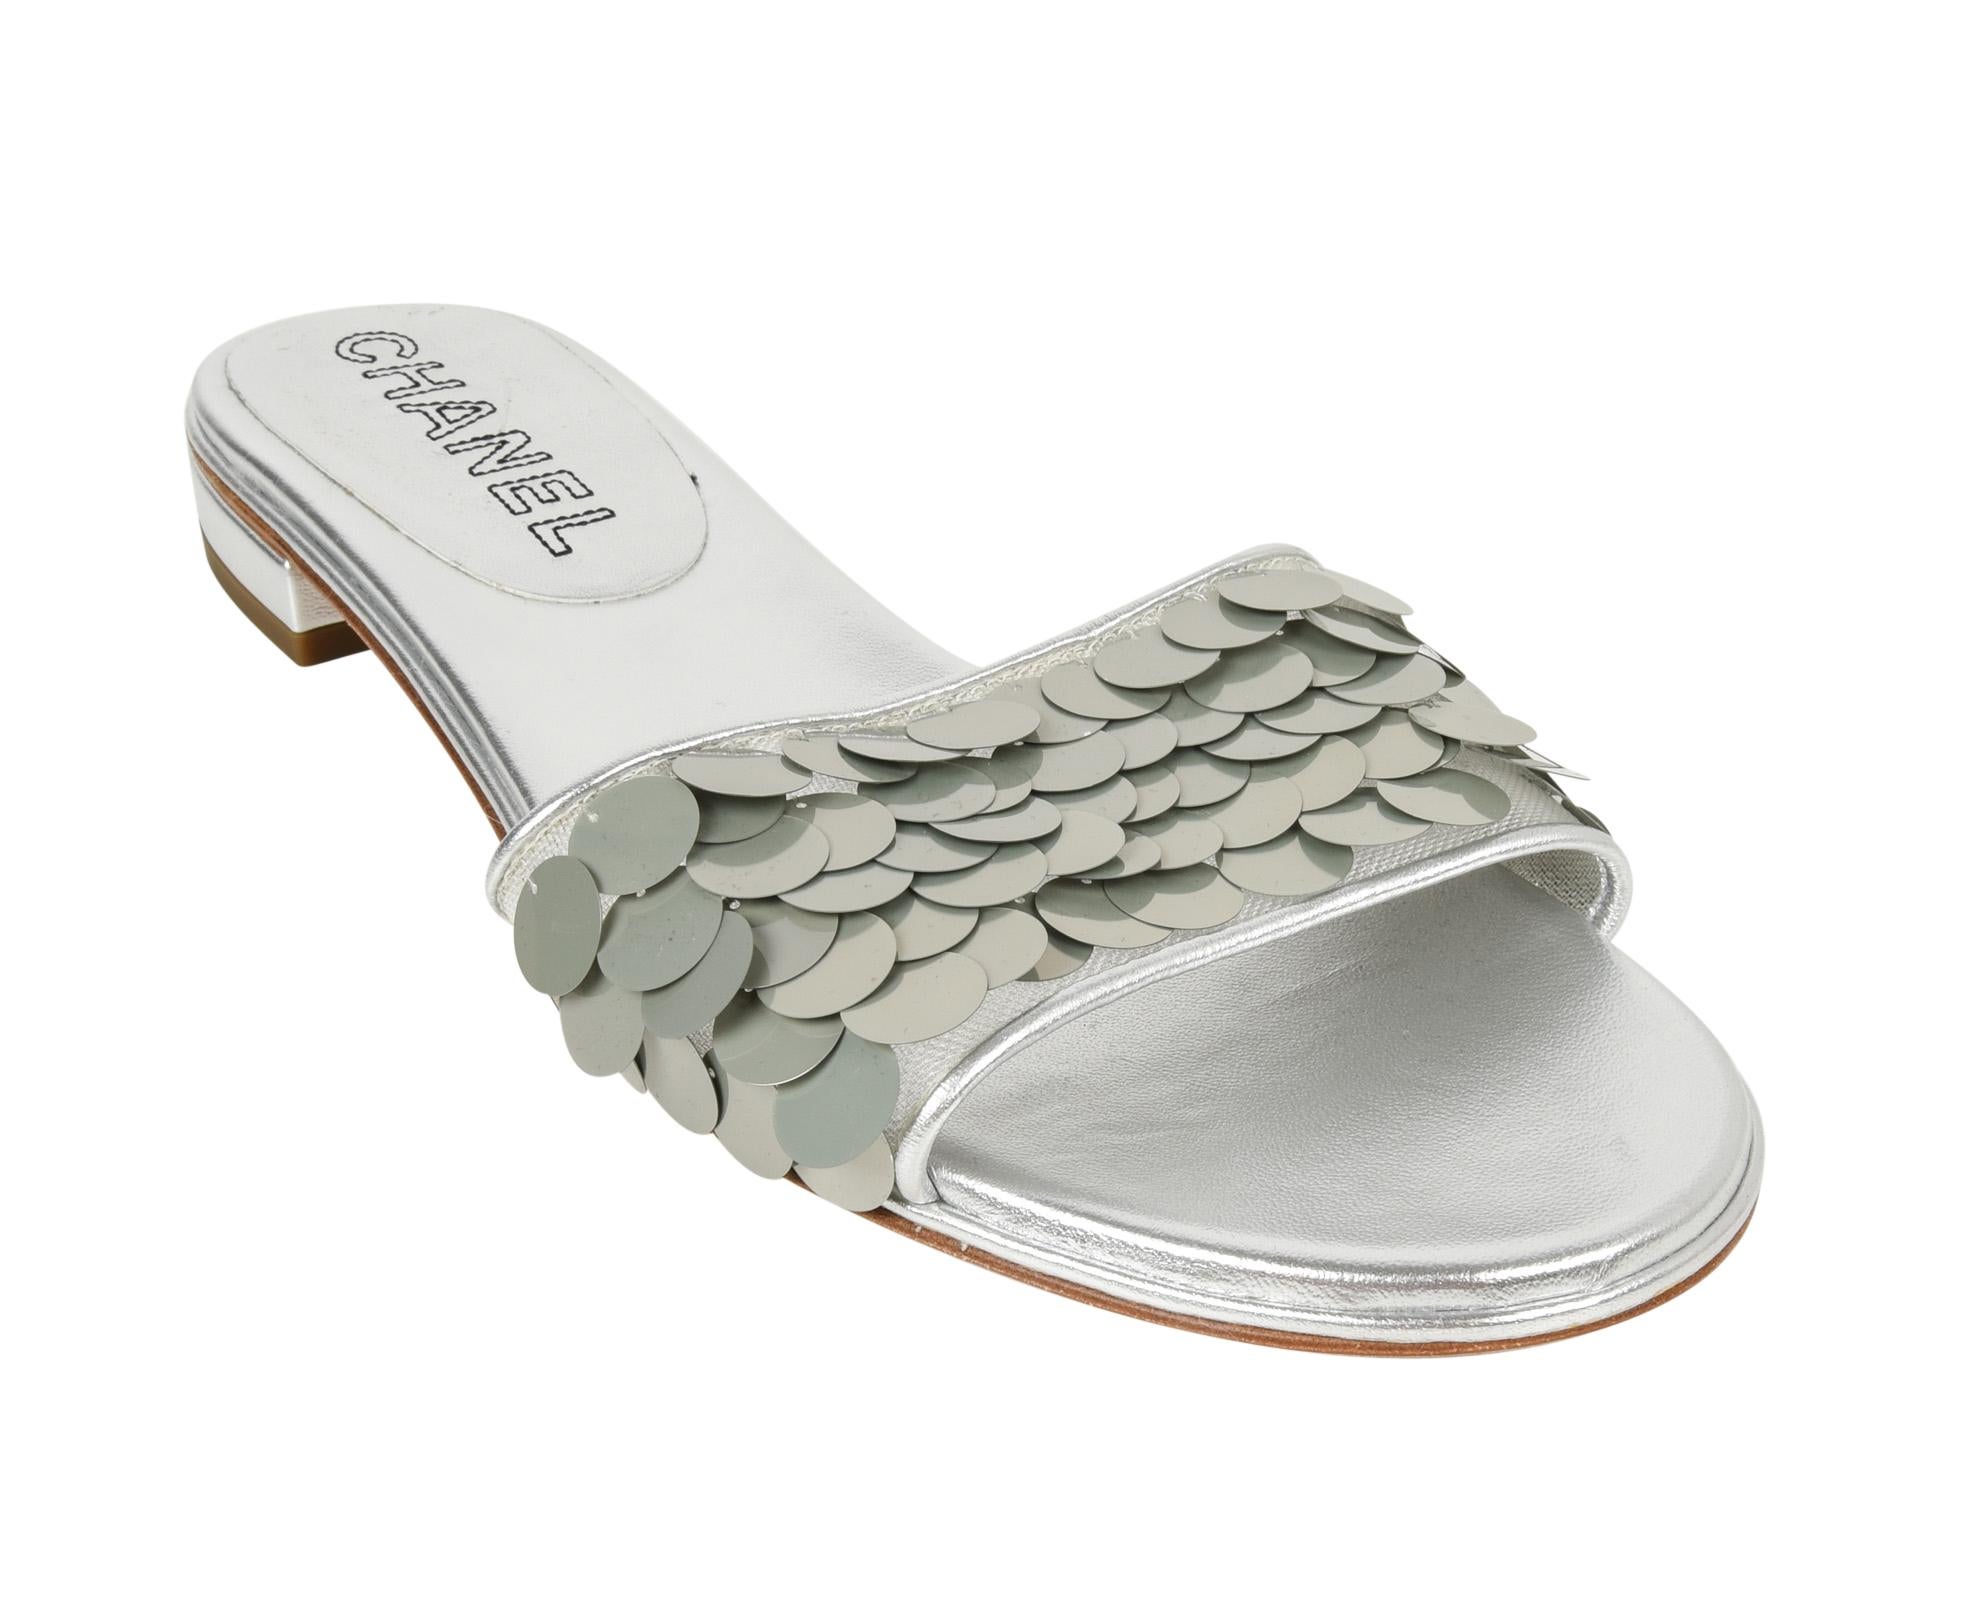 Chanel Shoe Silver Slide Light Catching Paillette Sequins 39.5 / 9.5 New 1